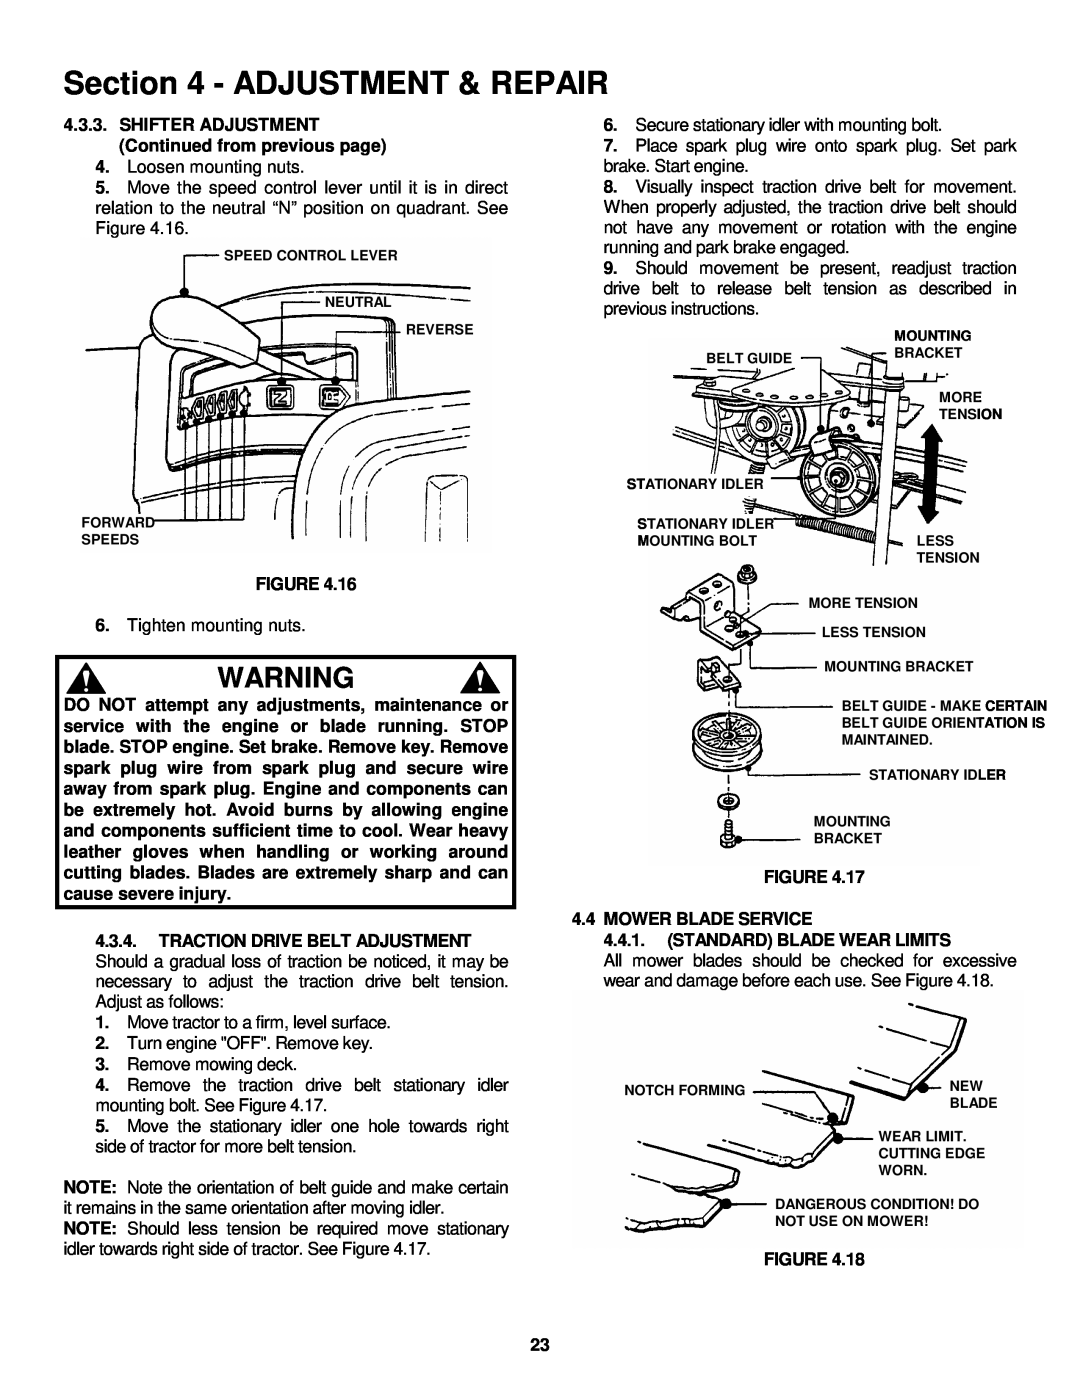 Snapper ELT145H33FBV important safety instructions Adjustment & Repair 